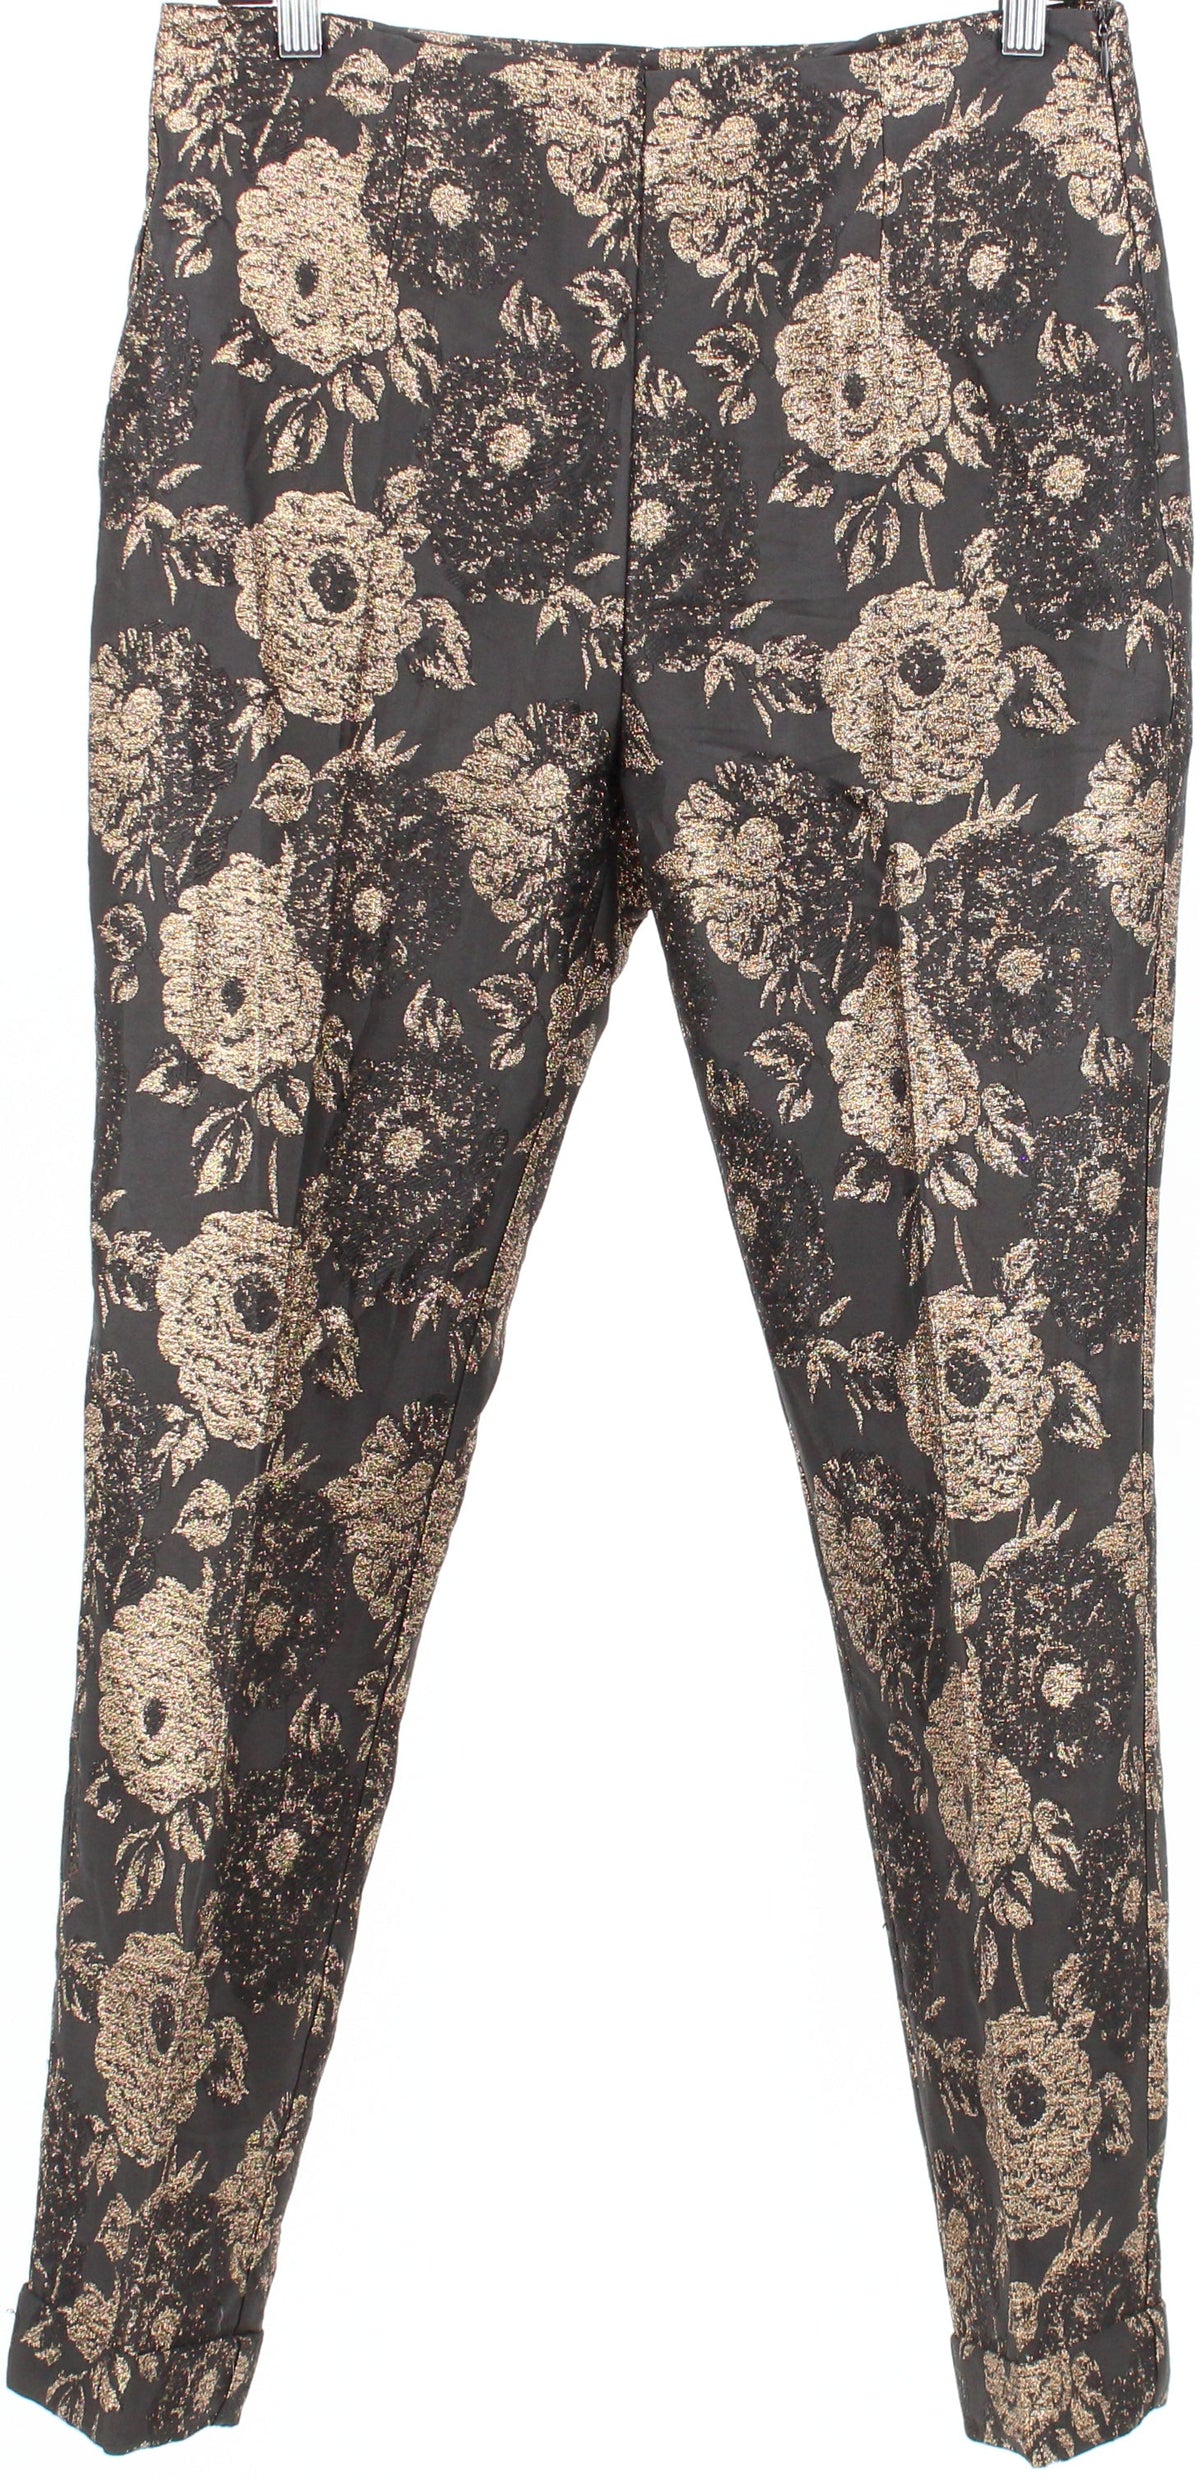 Zara Black and Gold Jacquard Pants